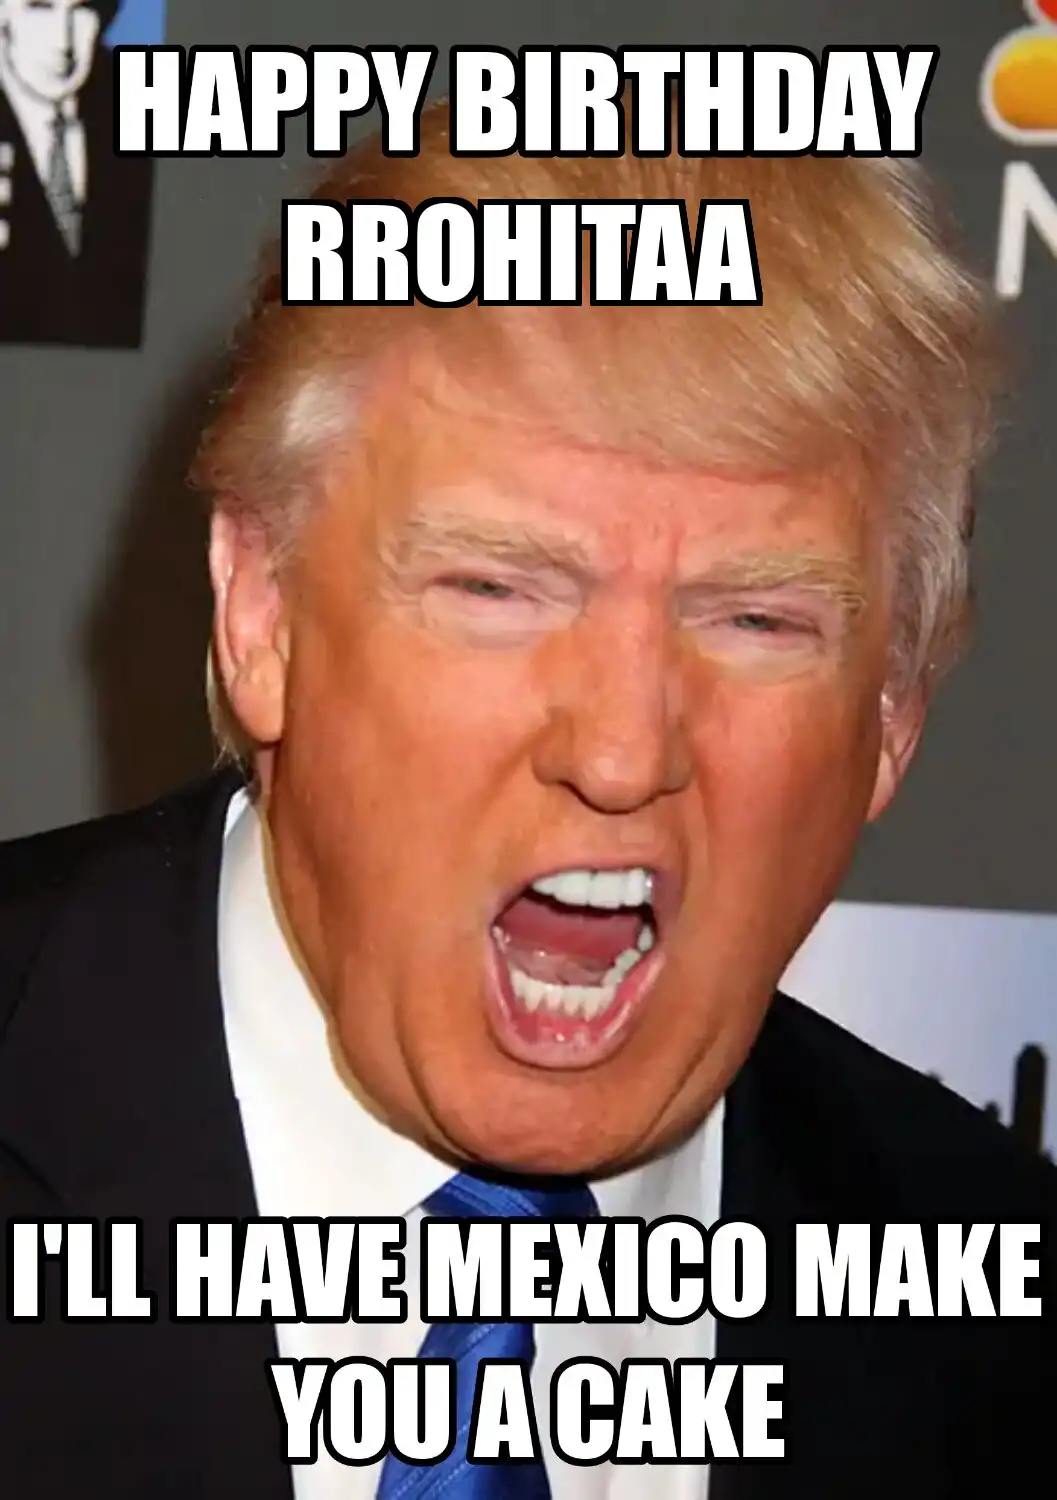 Happy Birthday Rrohitaa Mexico Make You A Cake Meme